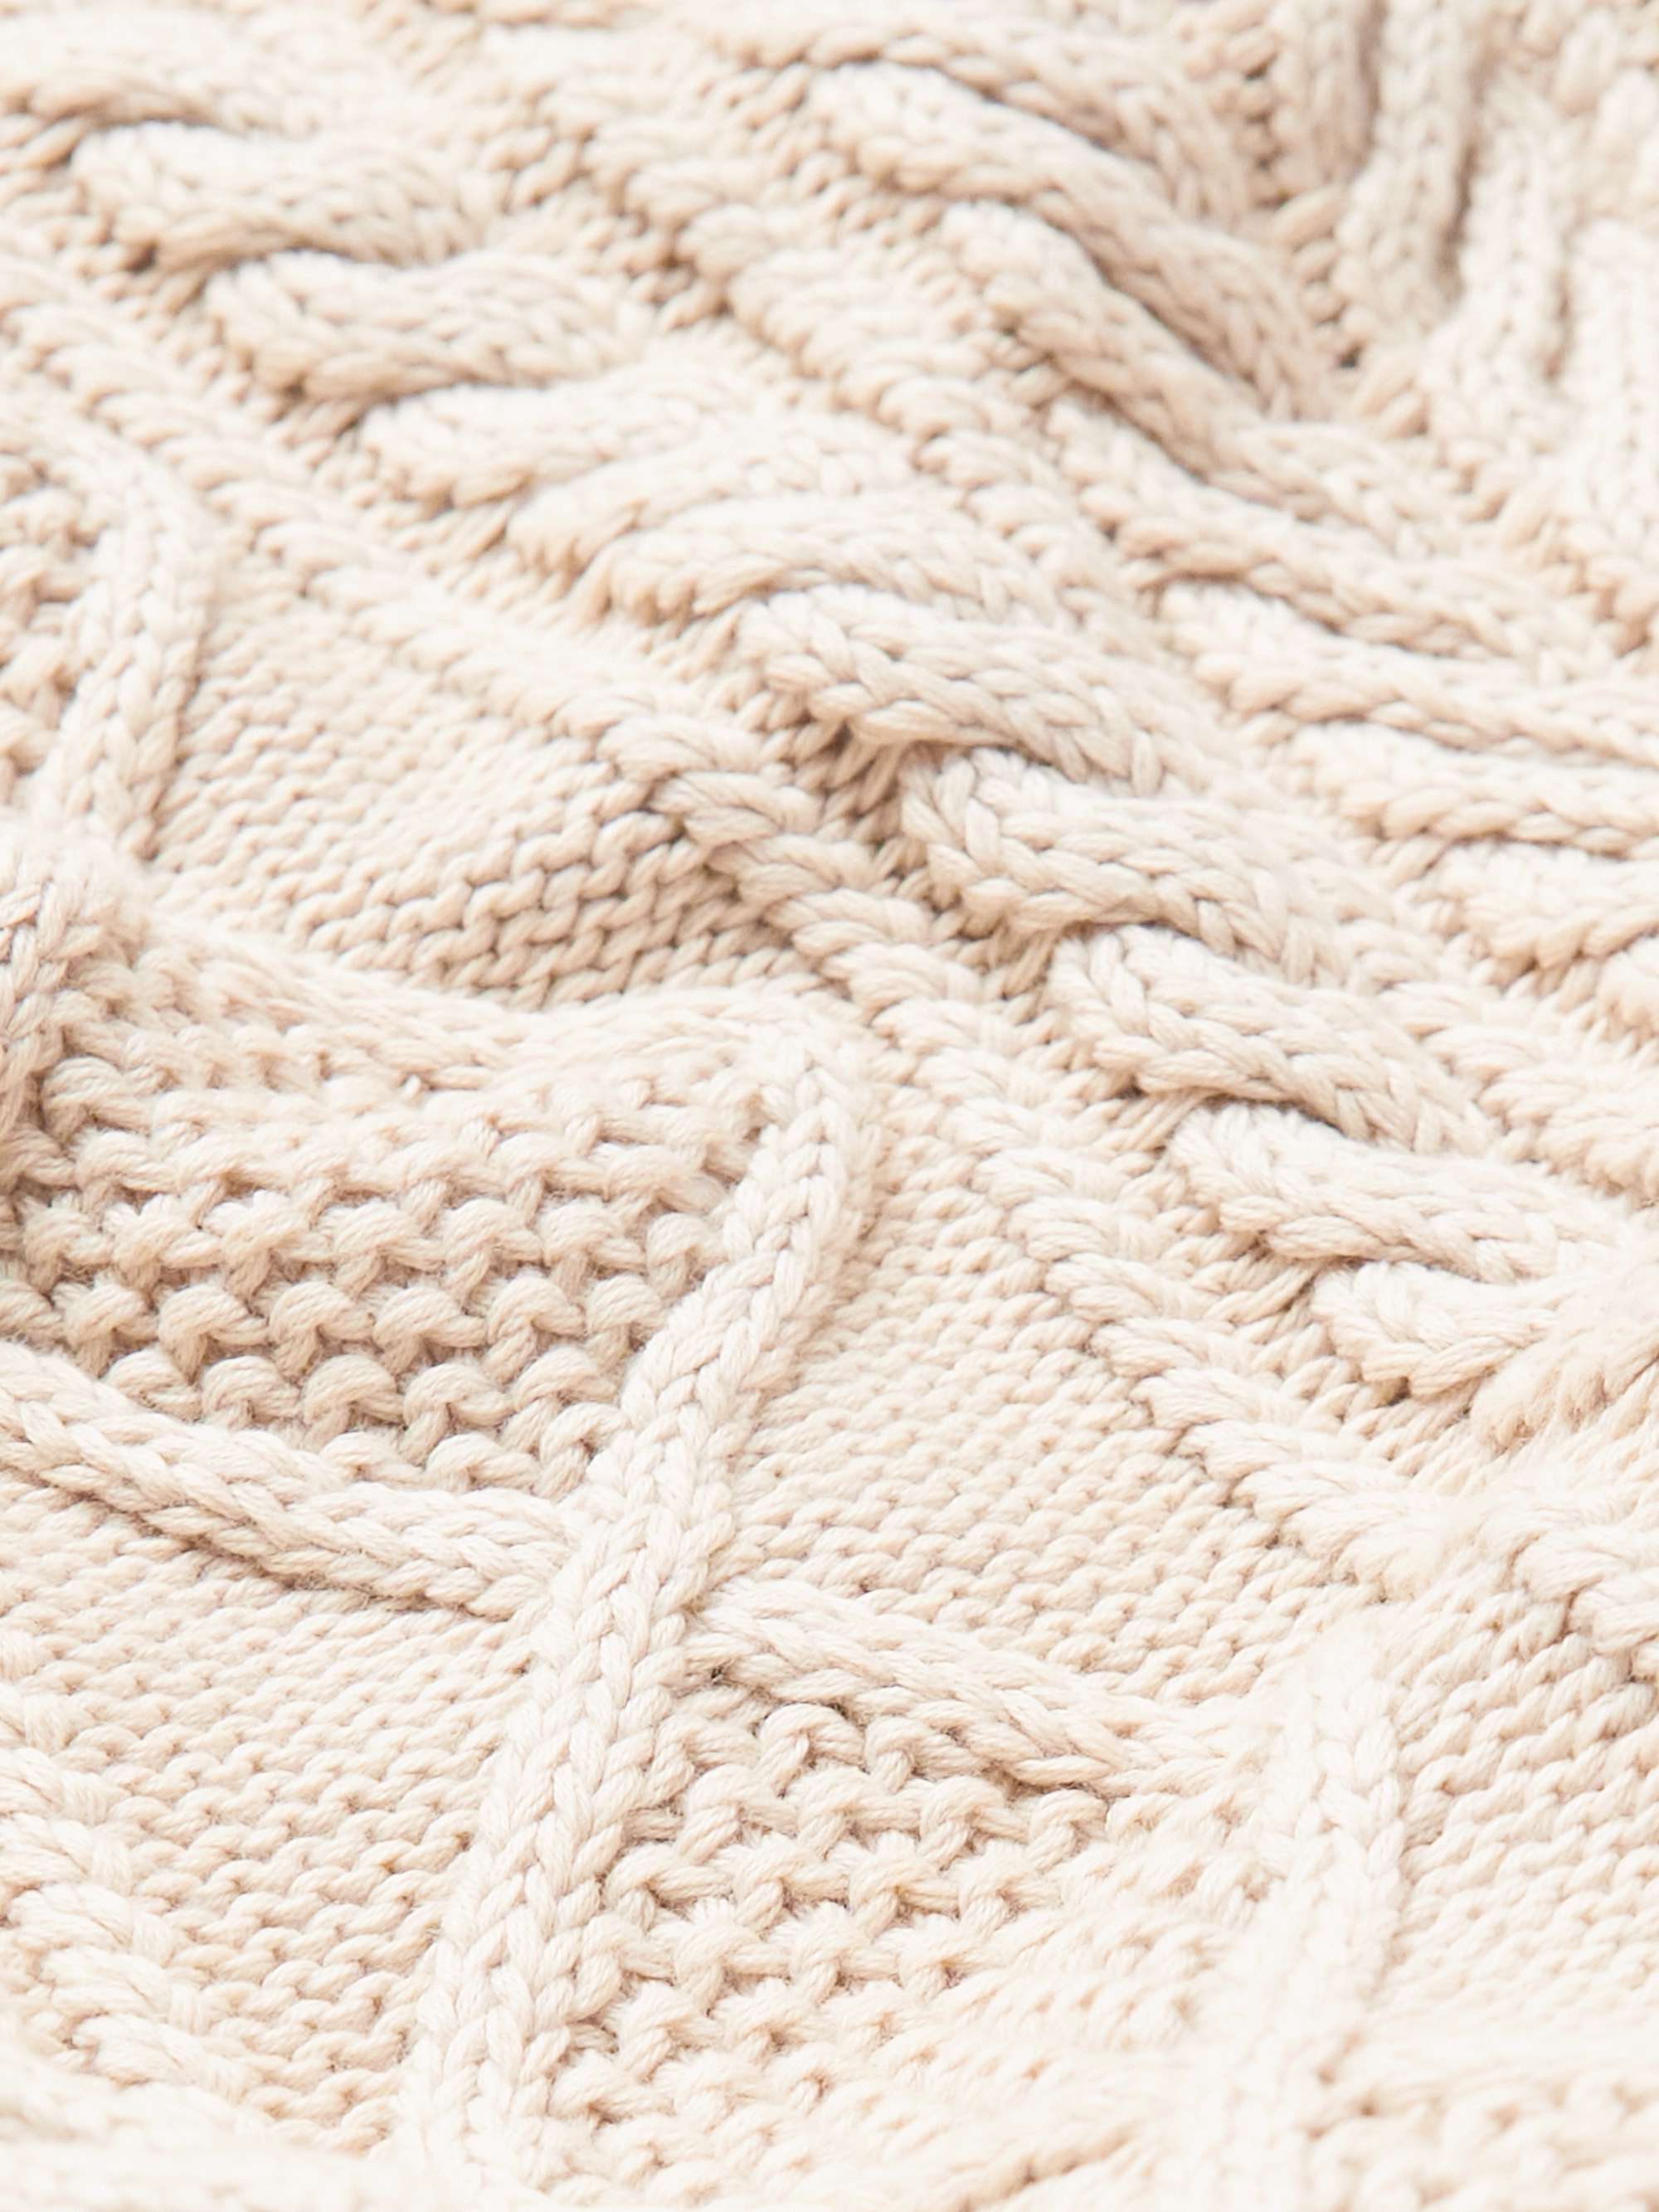 RAG & BONE Cable-Knit Cotton Sweater